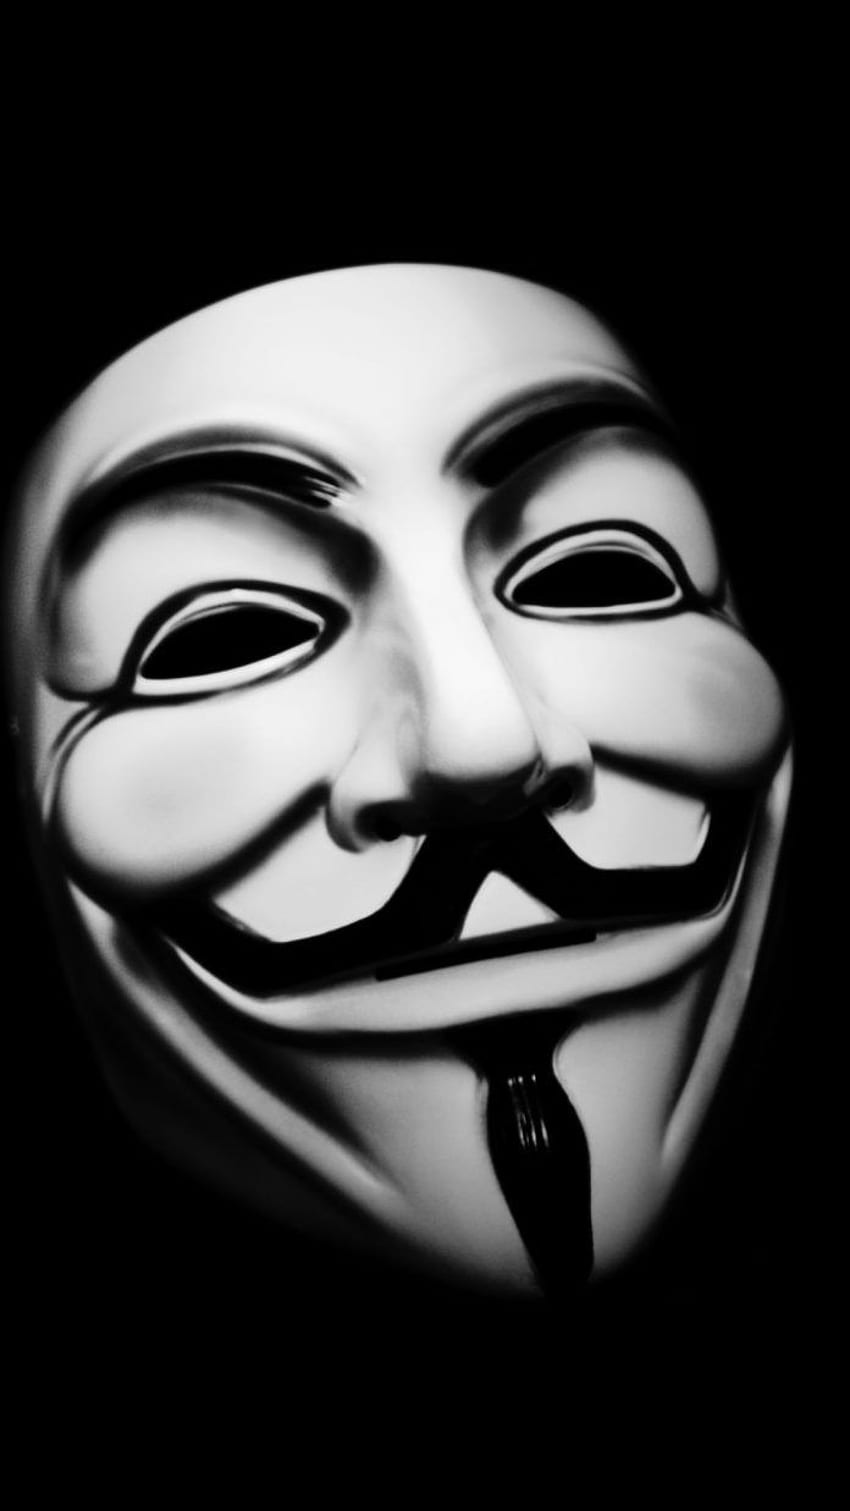 Latar Belakang Penuh Anonim untuk iPhone. iphone, Masker Wajah wallpaper ponsel HD